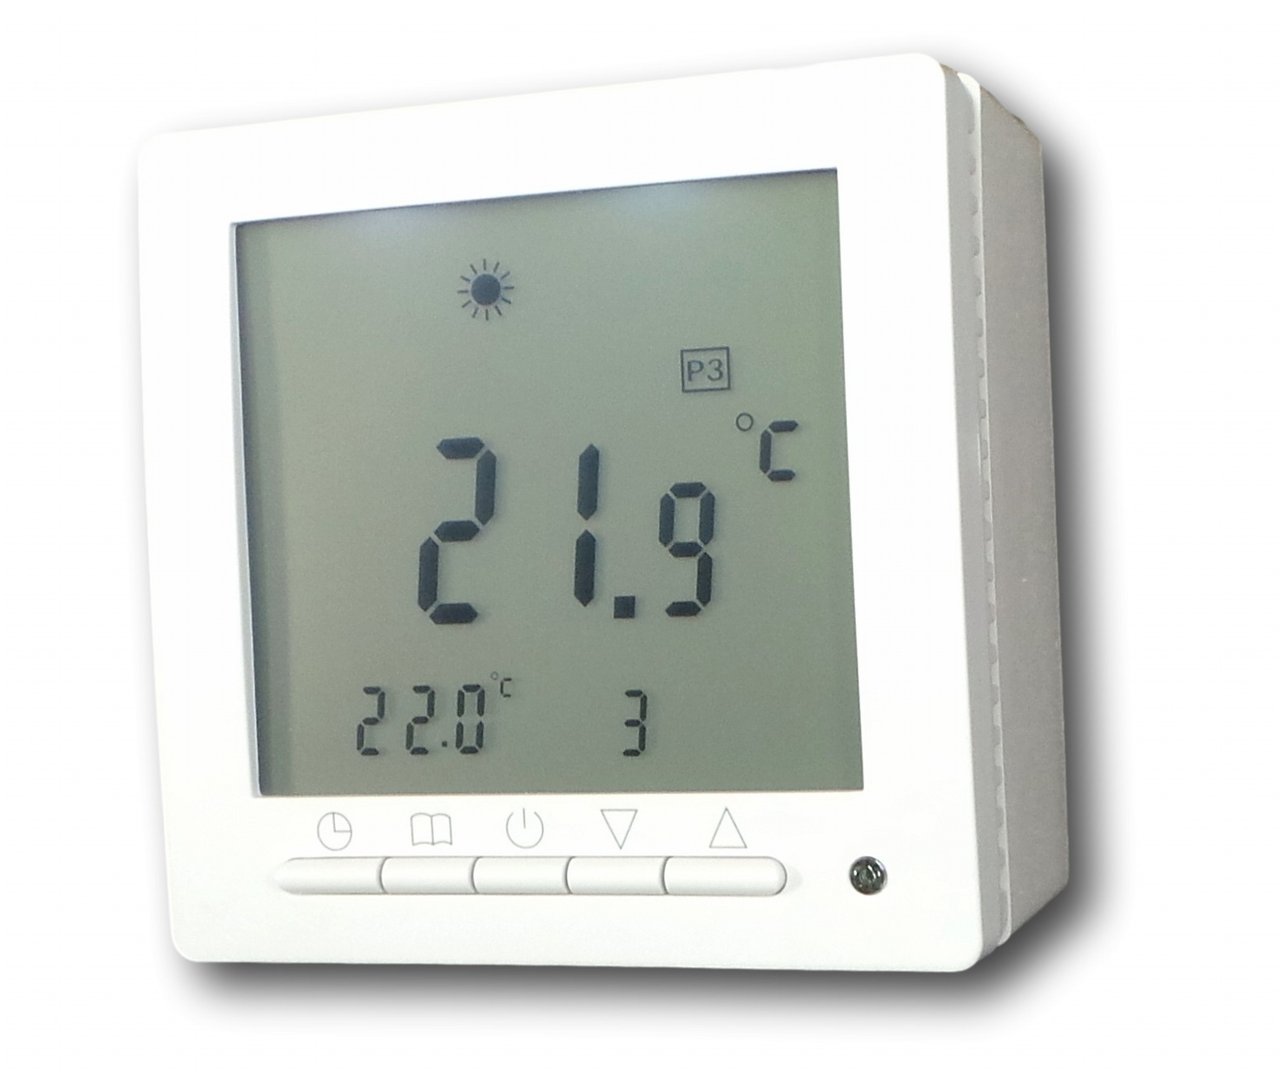 Digital Thermostat m Touchscreen Temperaturregler AUFPUTZ #ap695 